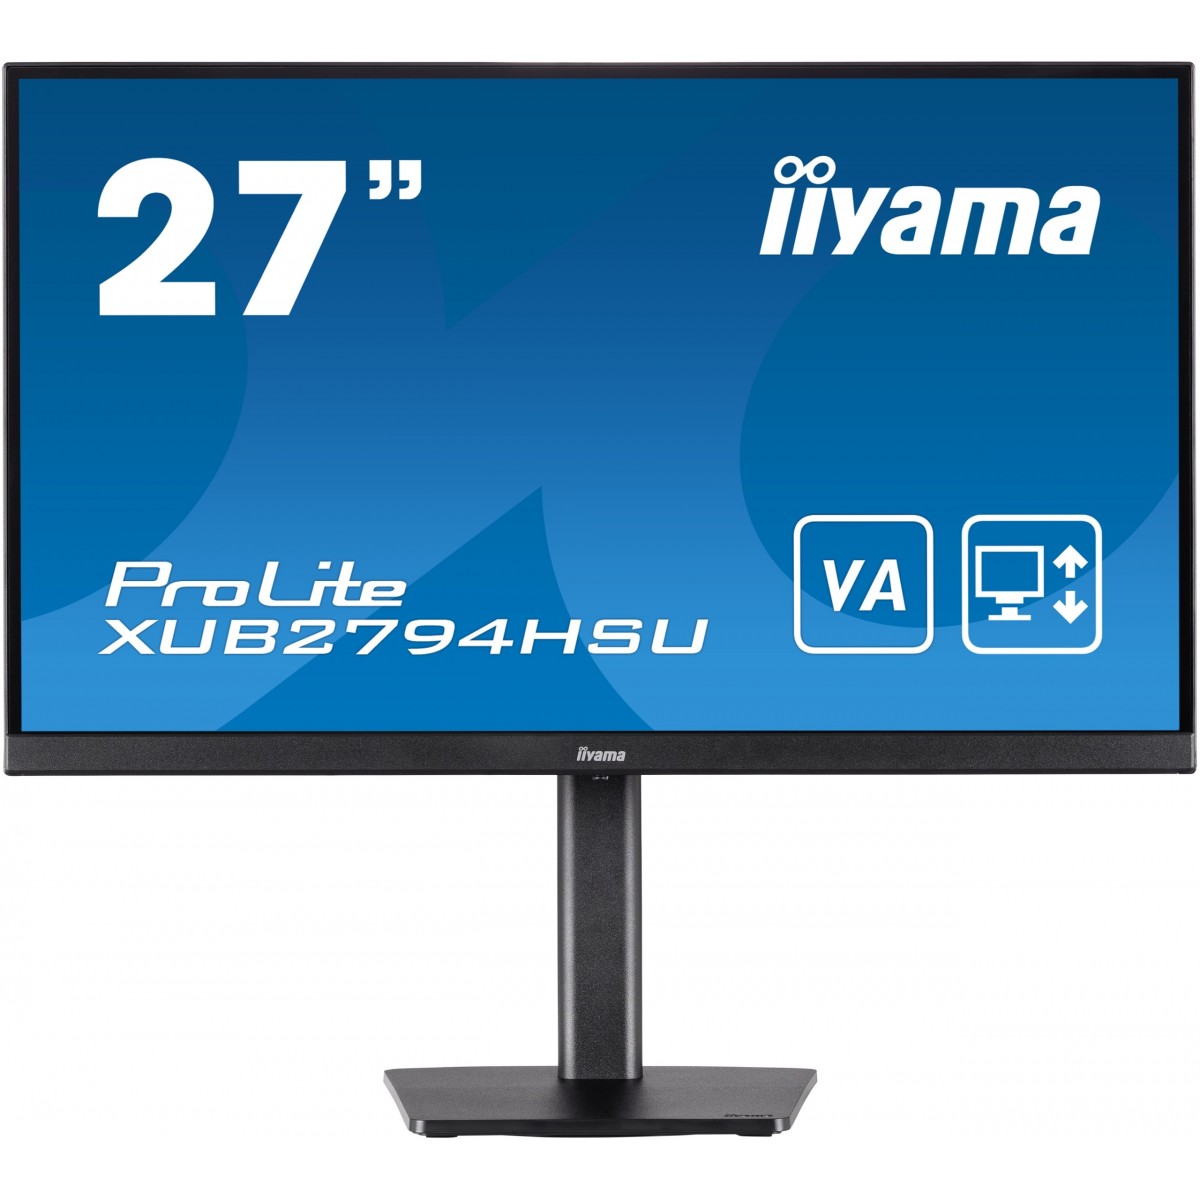 Iiyama 27iW LCD Business Full HD VA